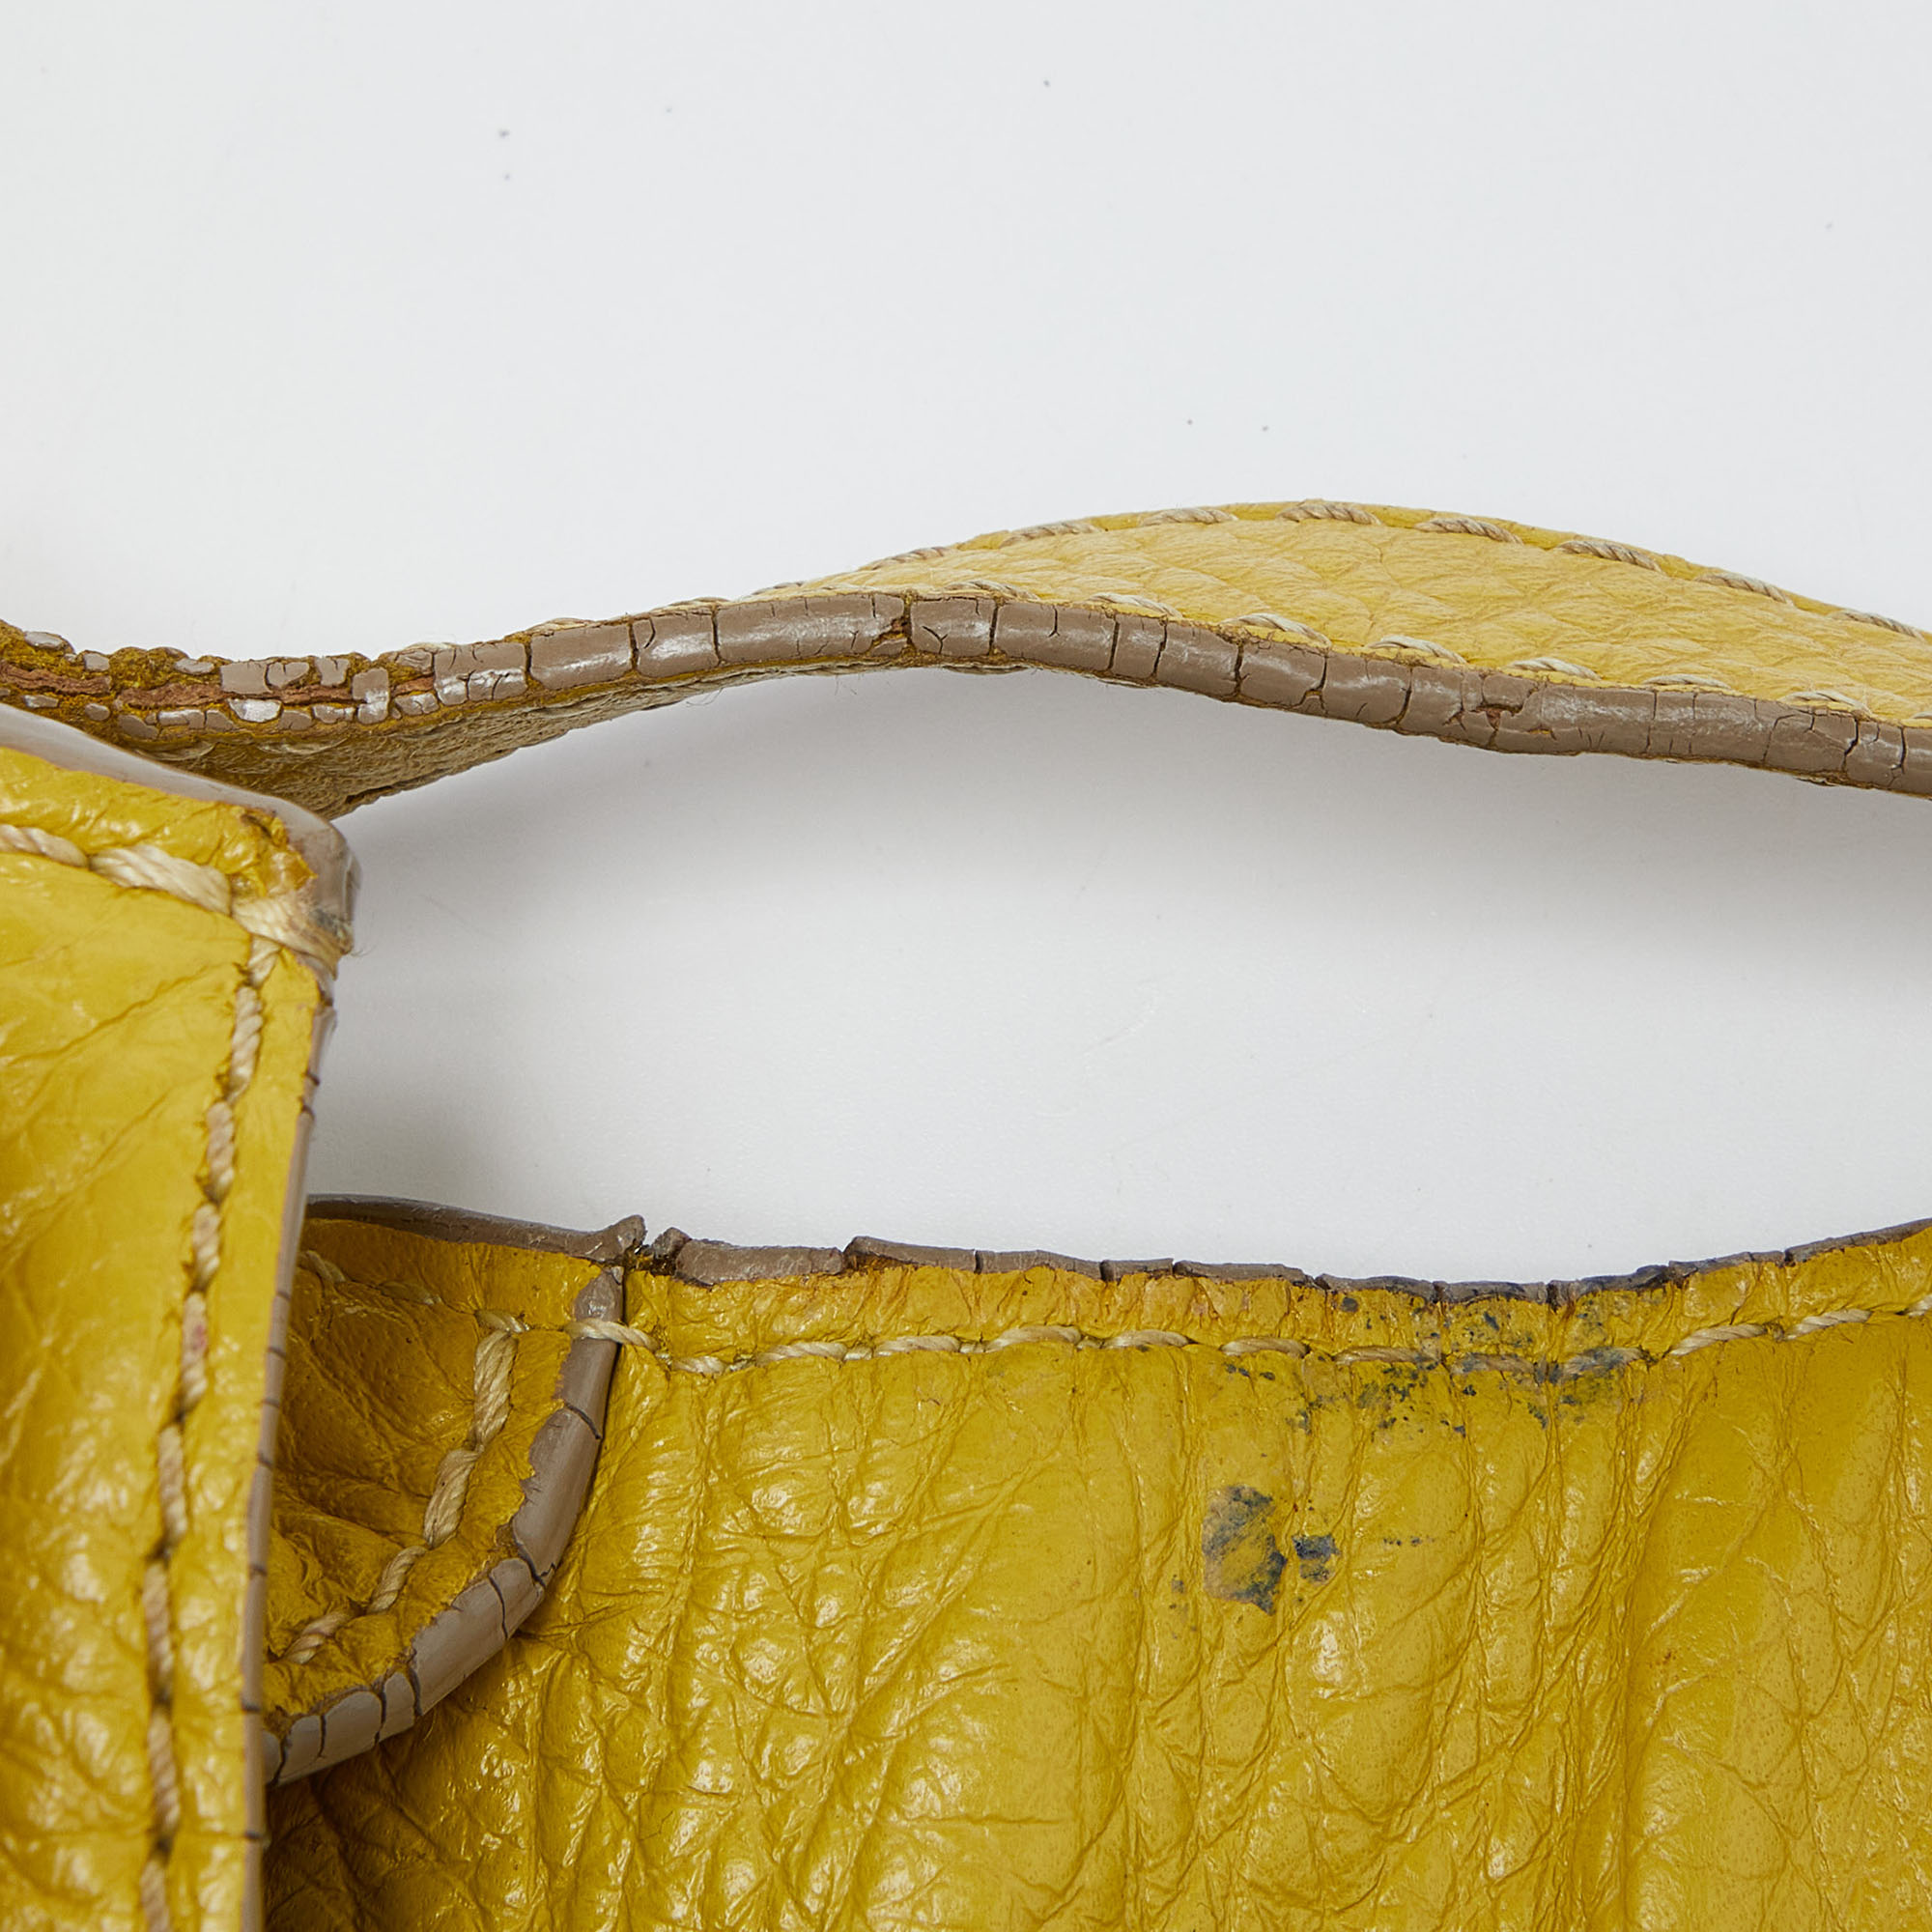 Chloe Yellow Leather Small Marcie Crossbody Bag